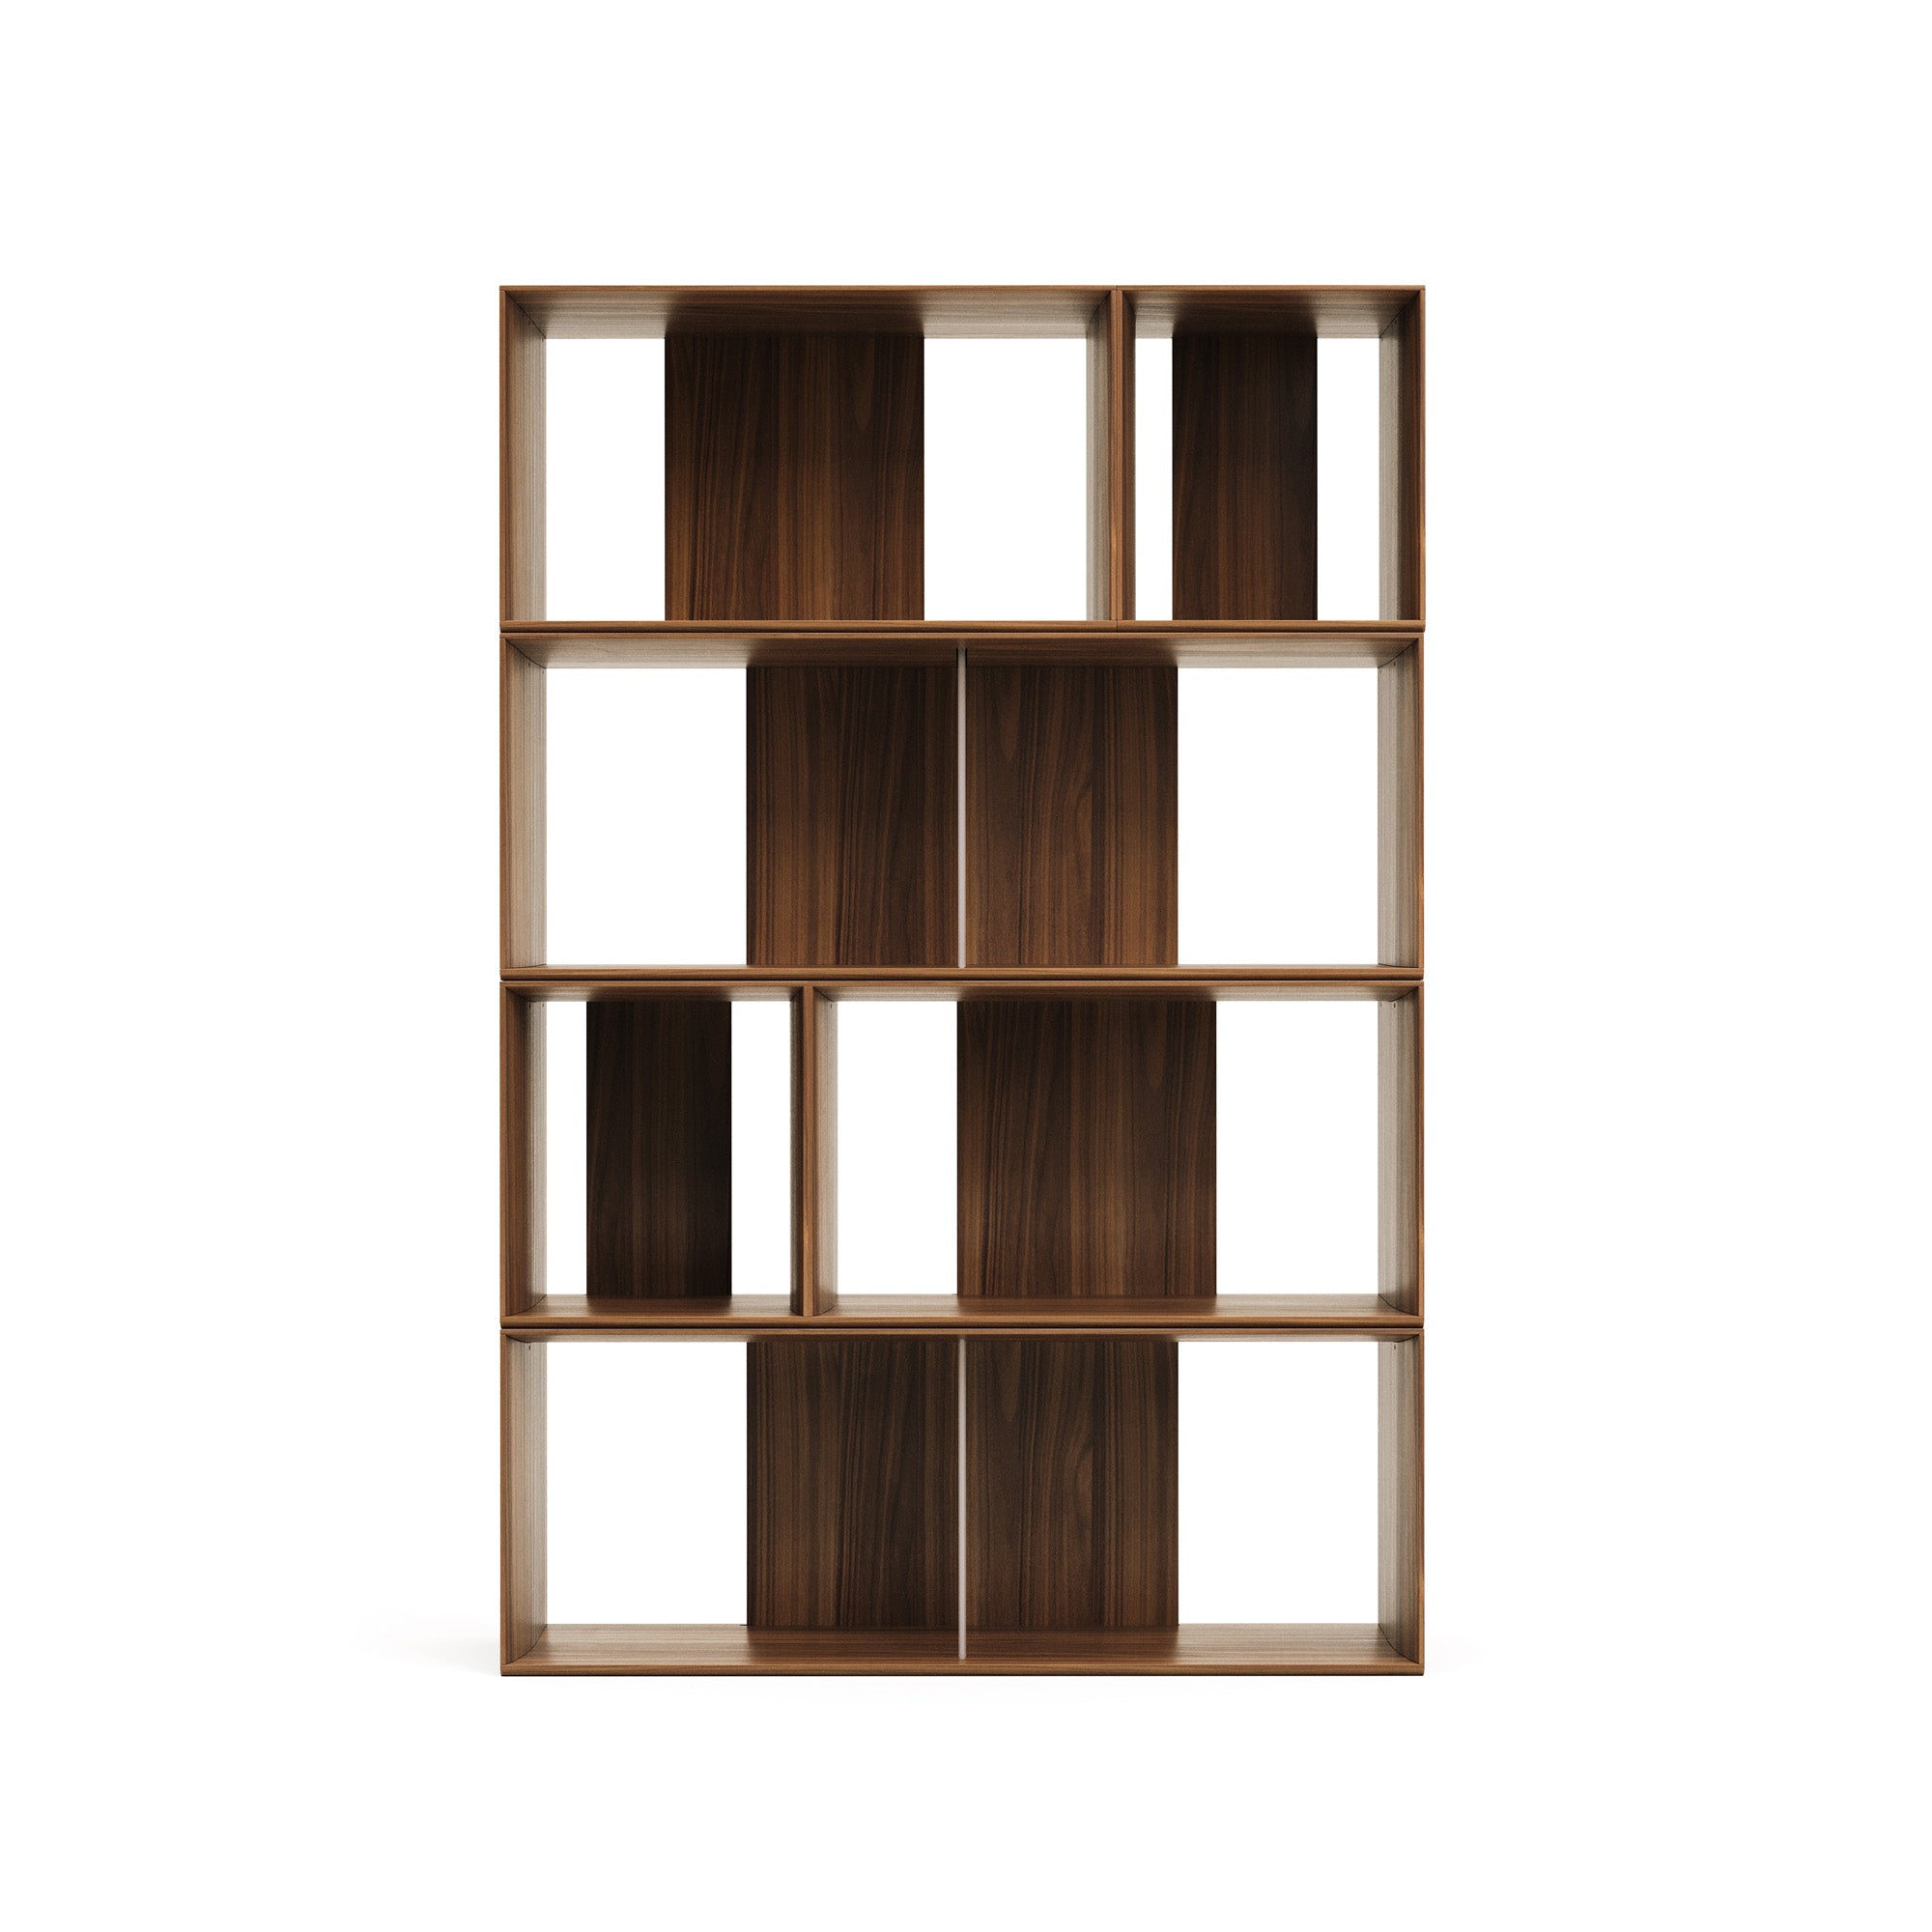 Litto set of 6 modular shelving units in walnut wood veneer, 101 x 152 cm